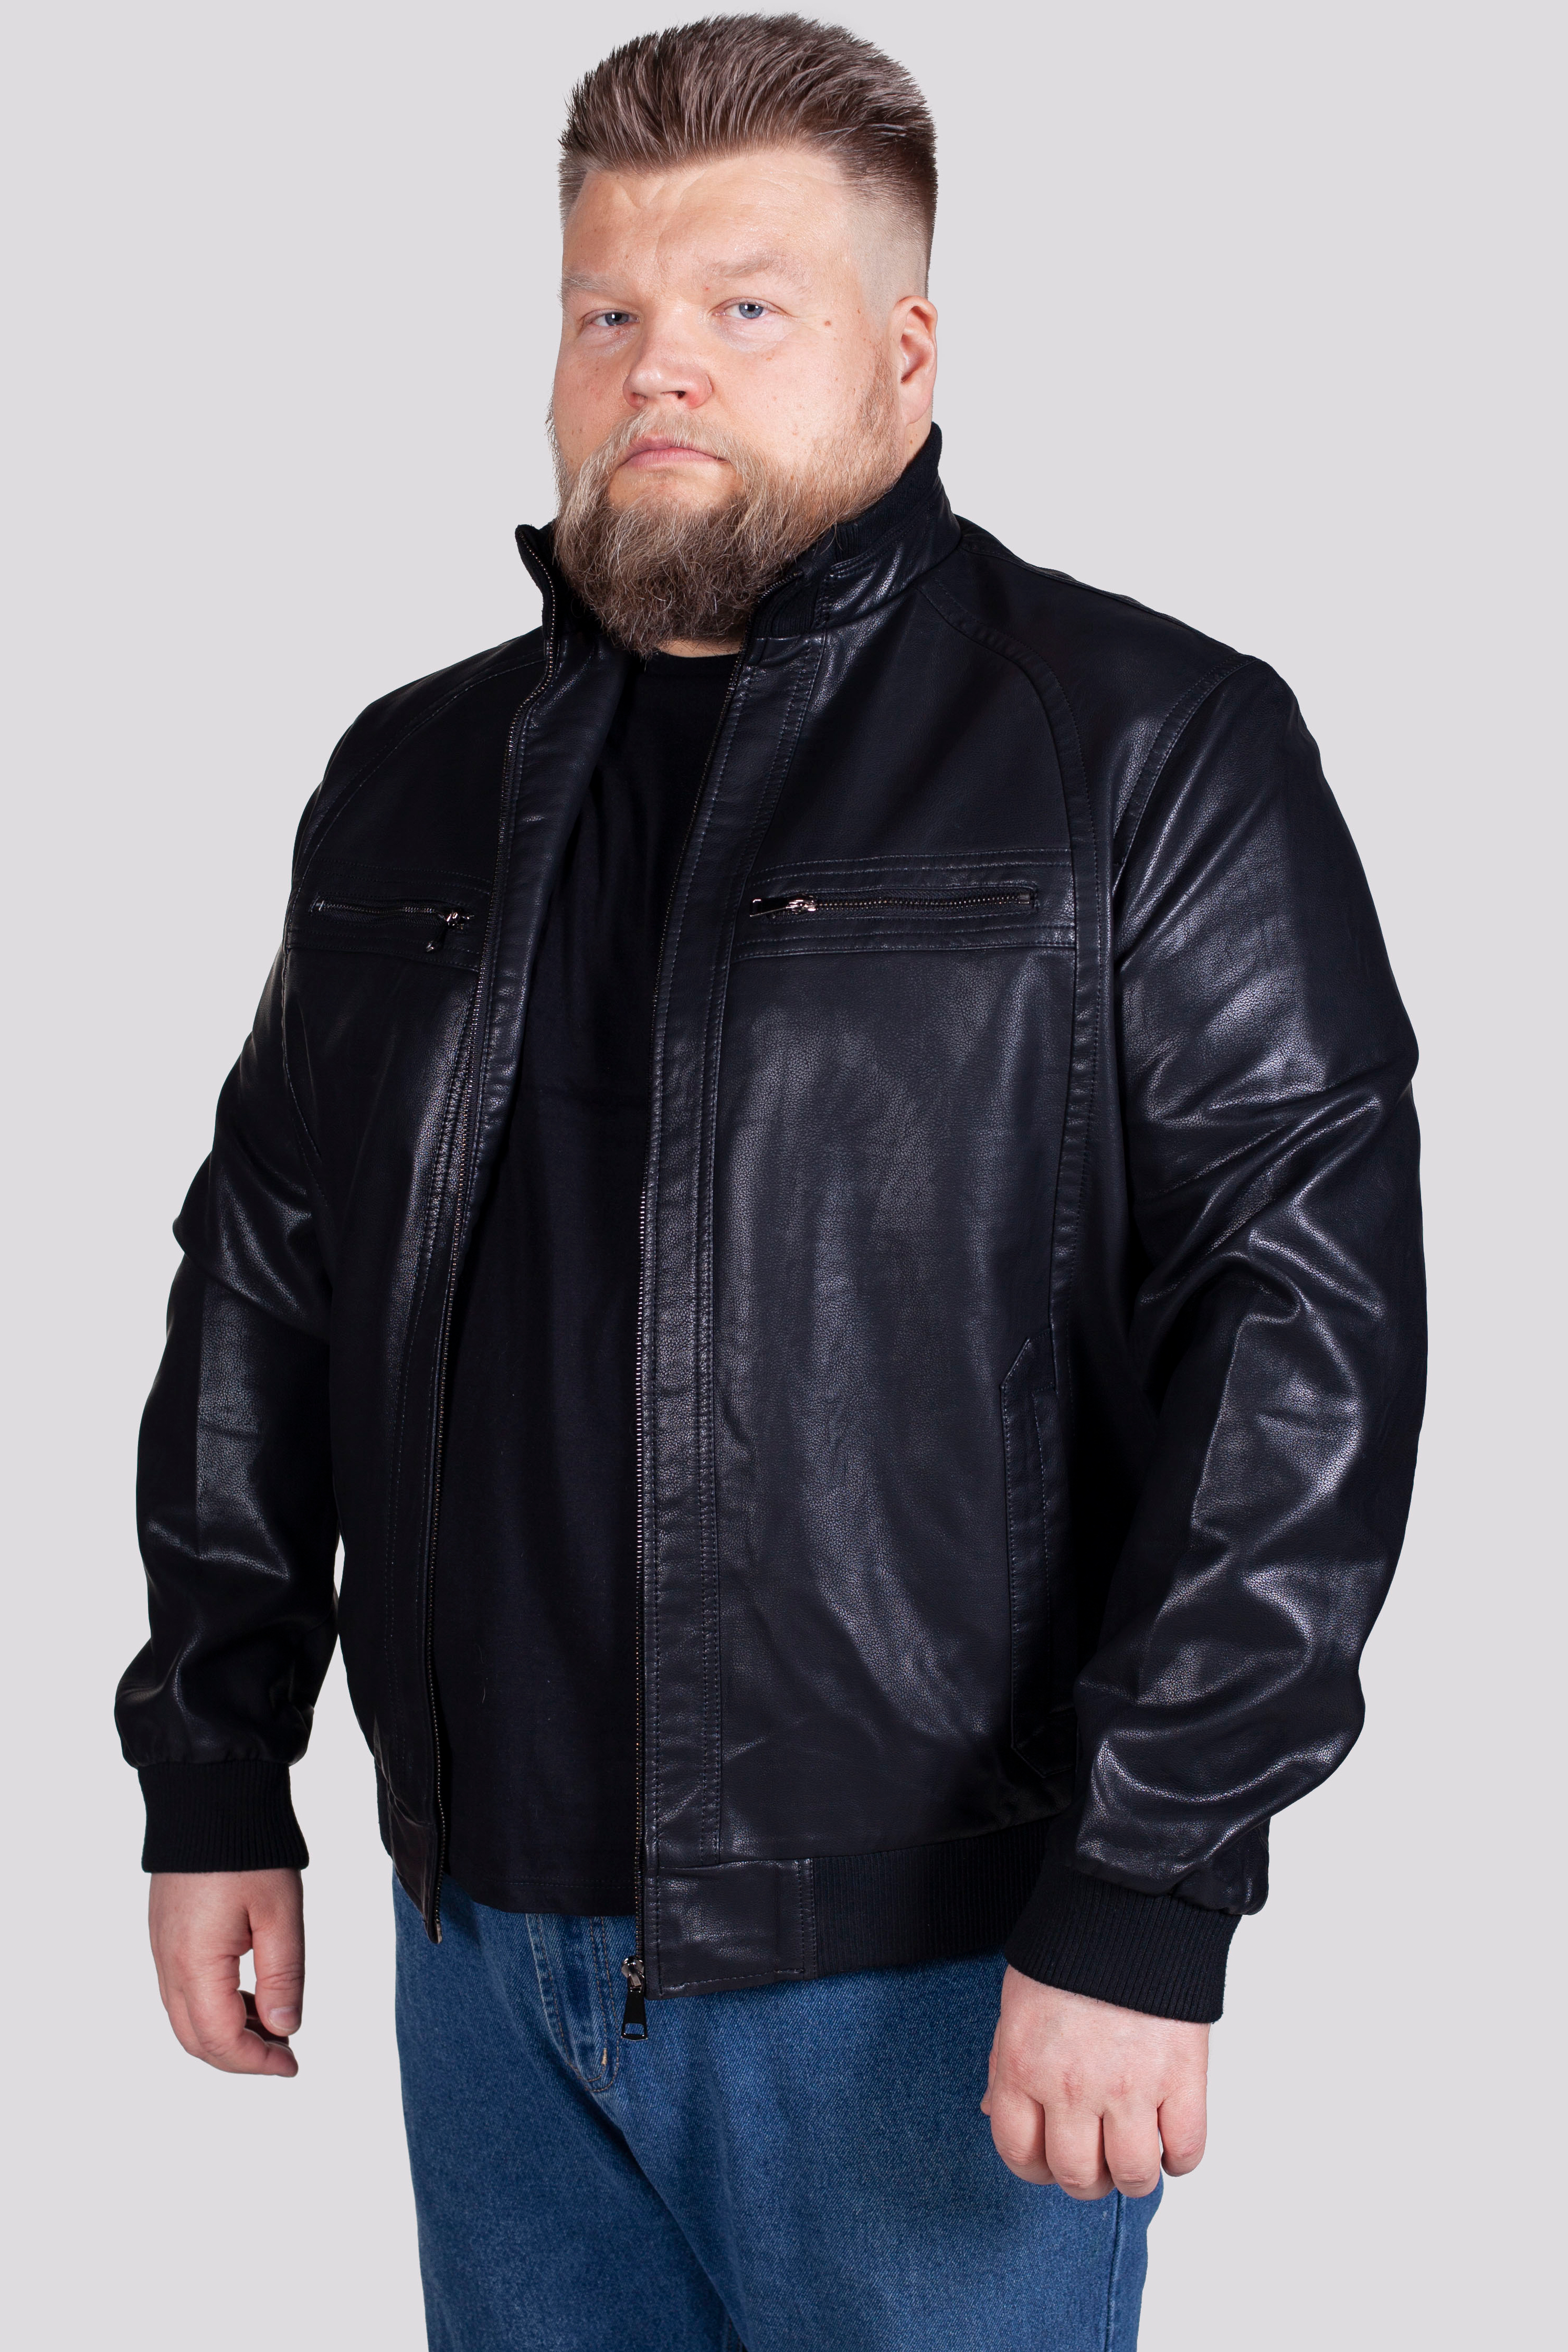 Кожаная куртка мужская ORO 809 черная 66 RU